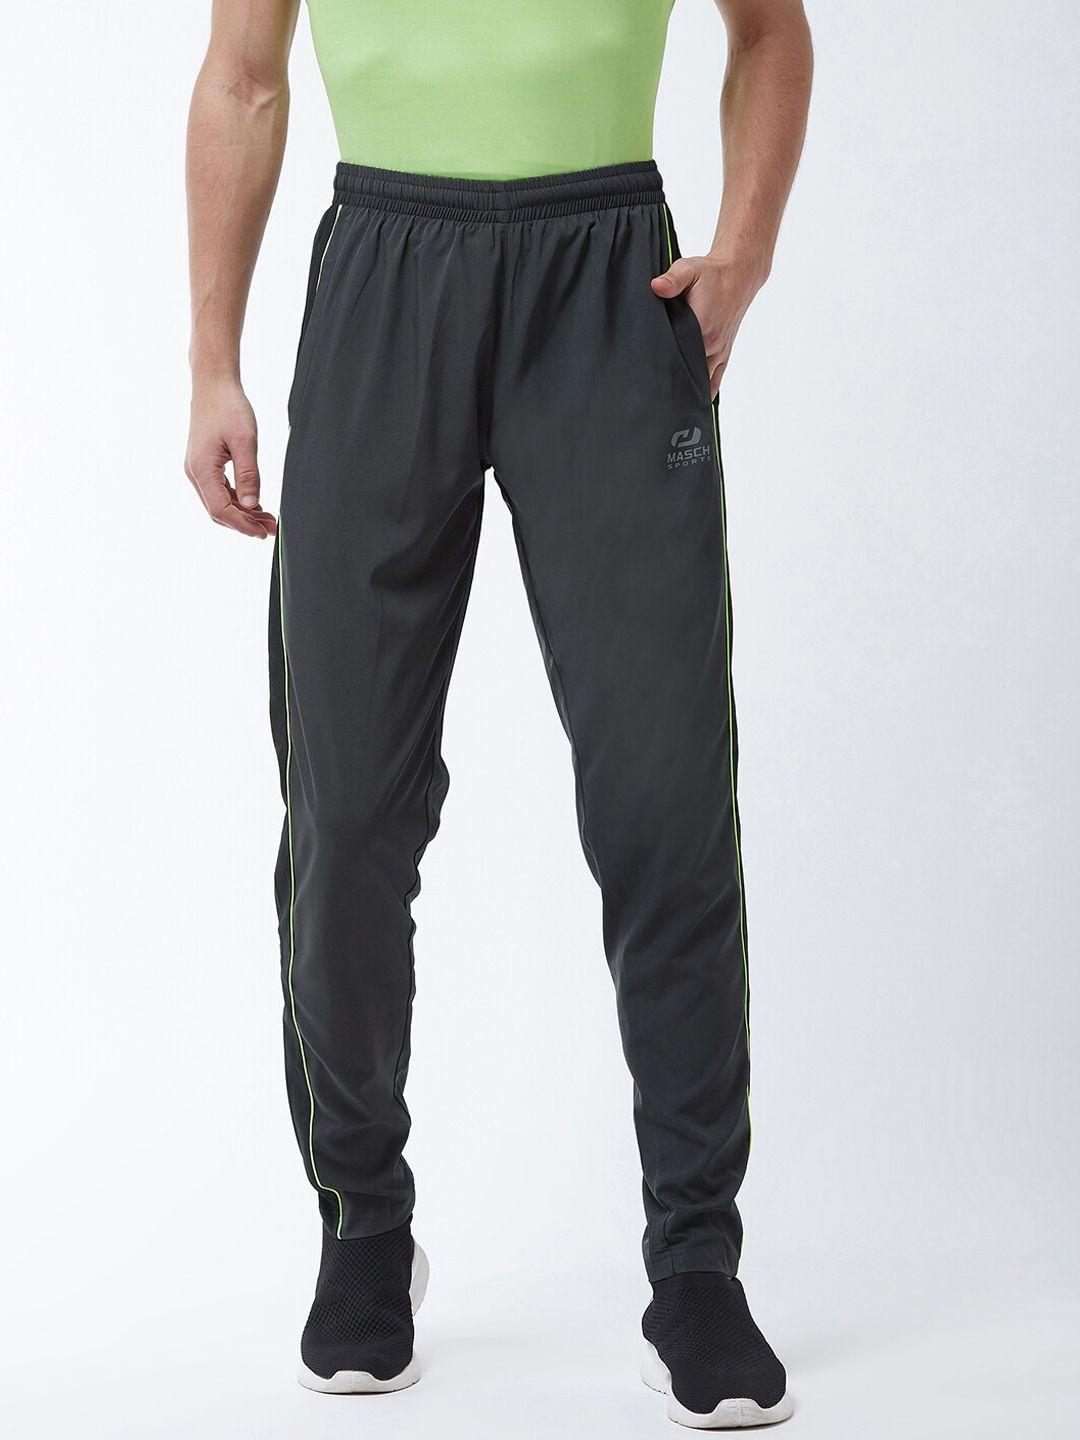 masch sports men grey solid dri-fit polyester elastane blend track pants